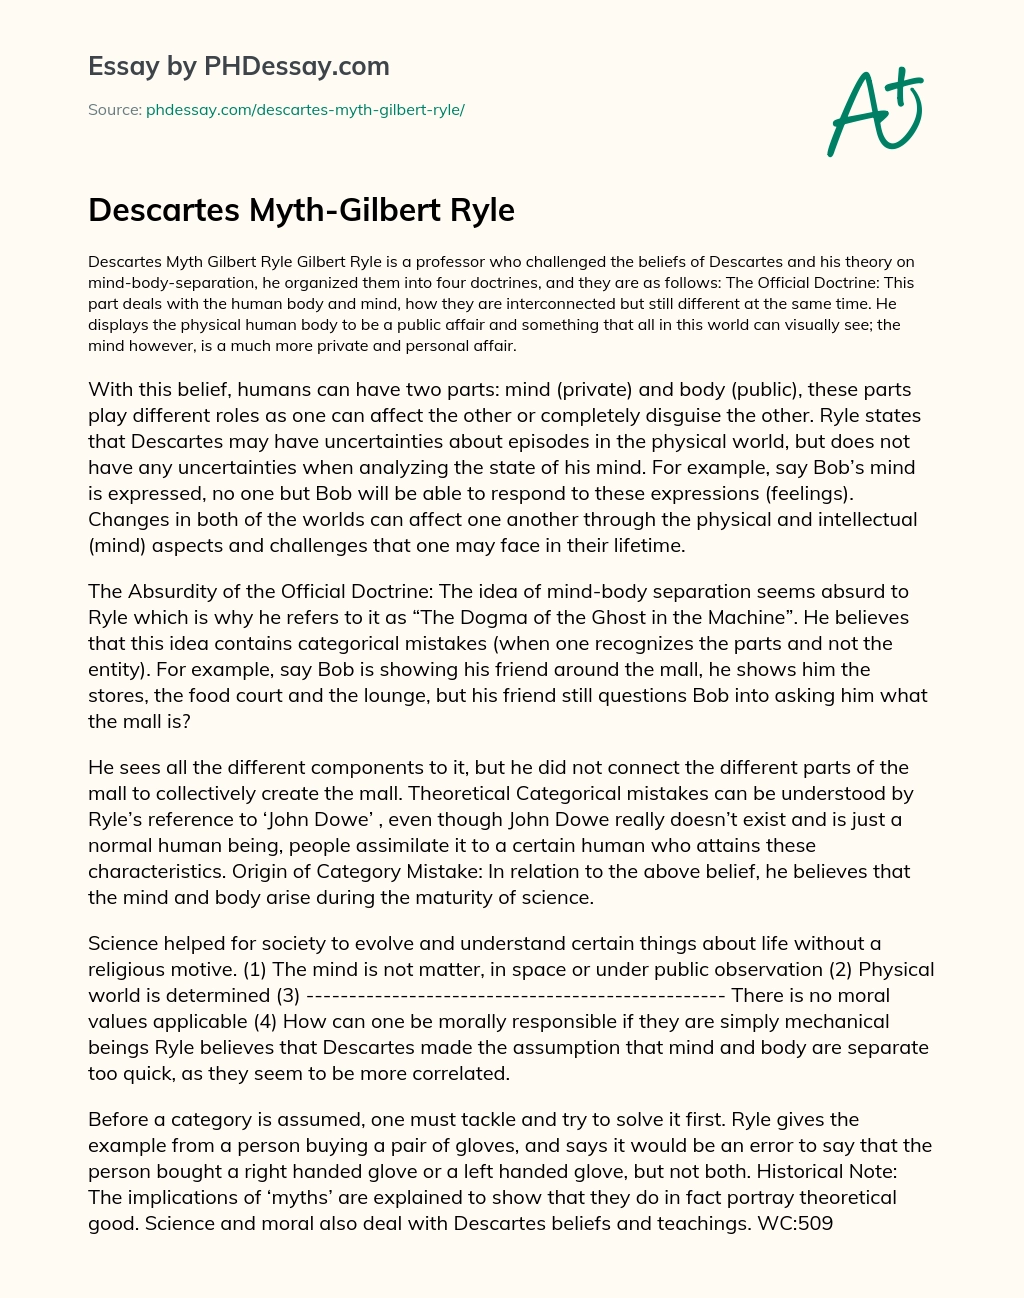 Descartes Myth-Gilbert Ryle essay